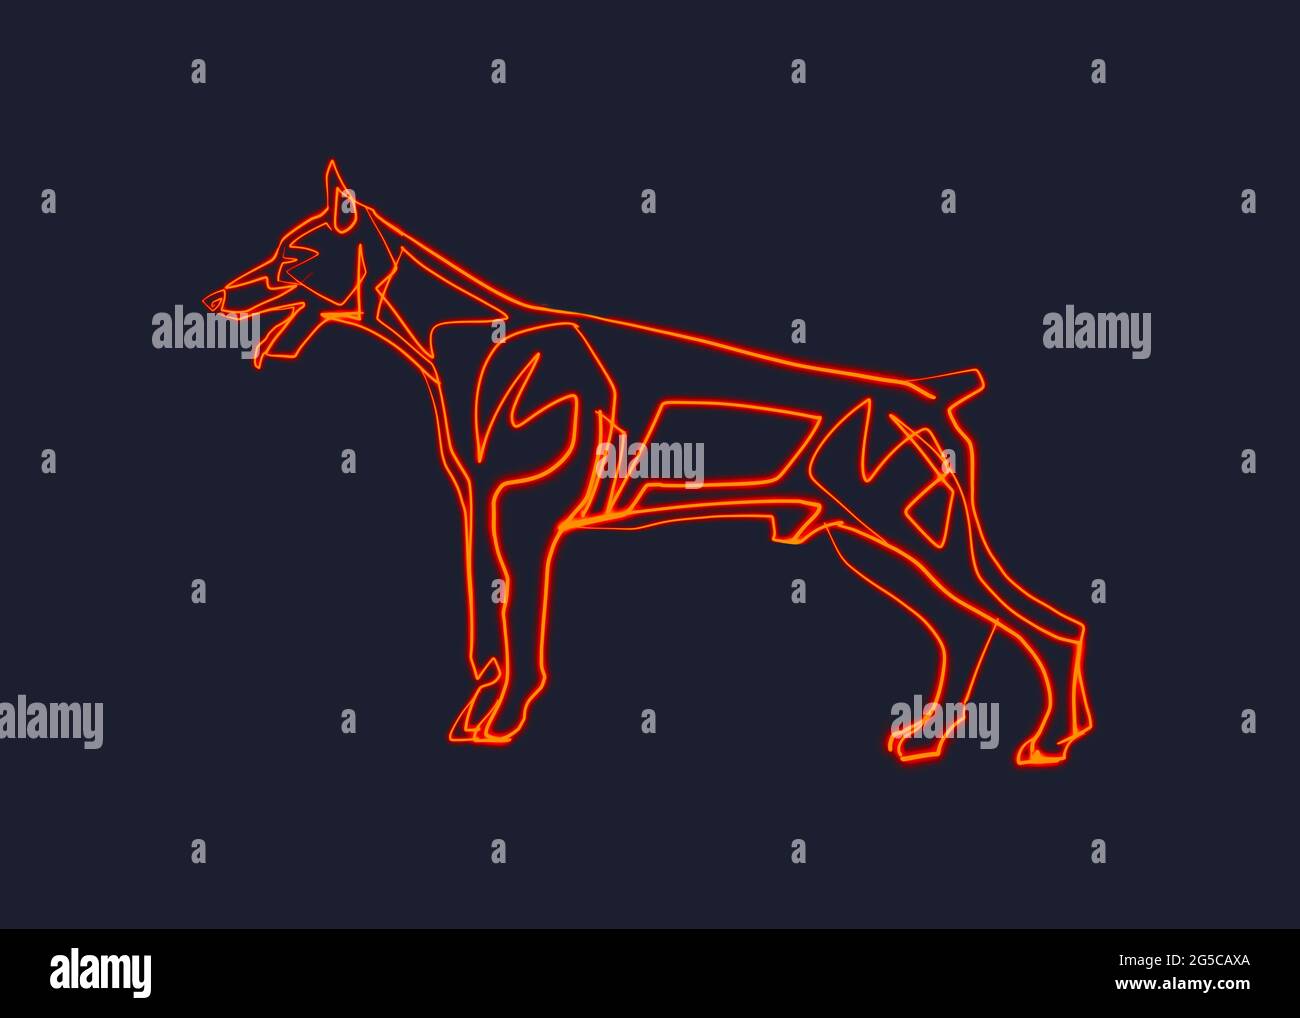 Hand drawn minimal illustration or drawing of a doberman dog Stock Photo